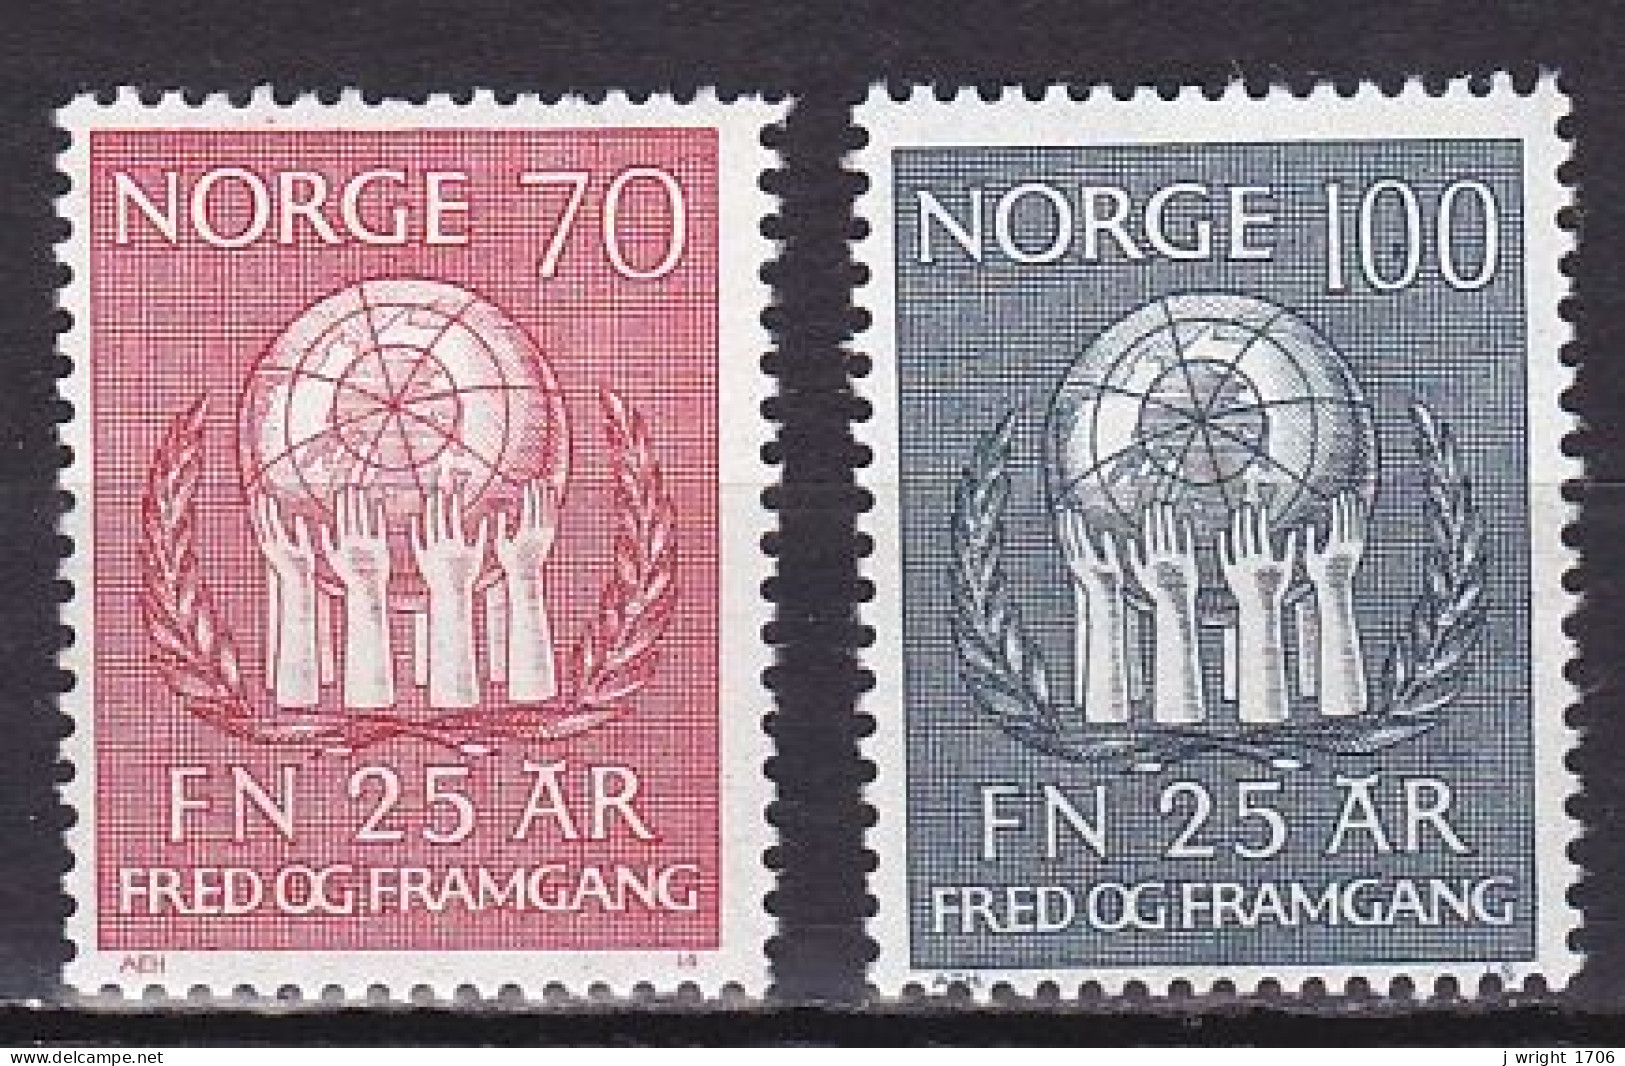 Norway, 1970, United Nations UN 25th Anniv, Set, MNH - Ongebruikt